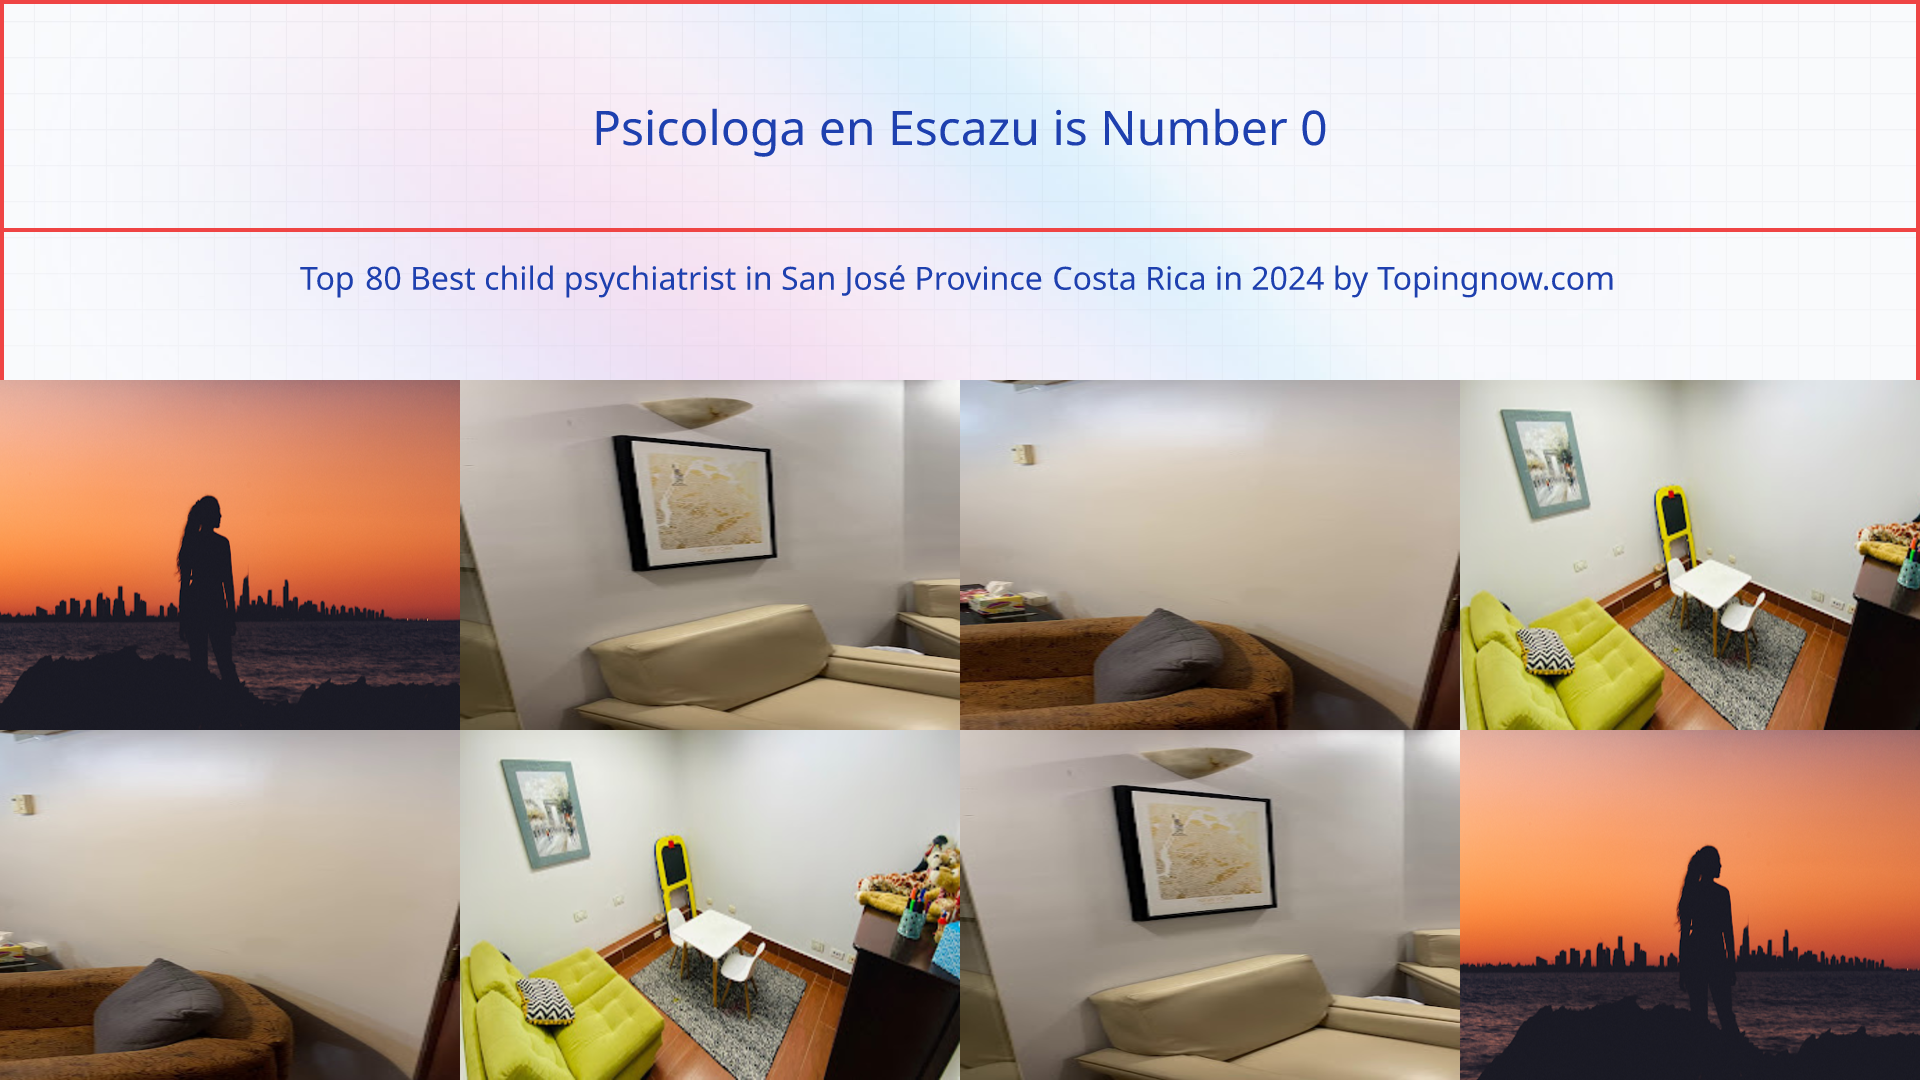 Psicologa en Escazu: Top 80 Best child psychiatrist in San José Province Costa Rica in 2024